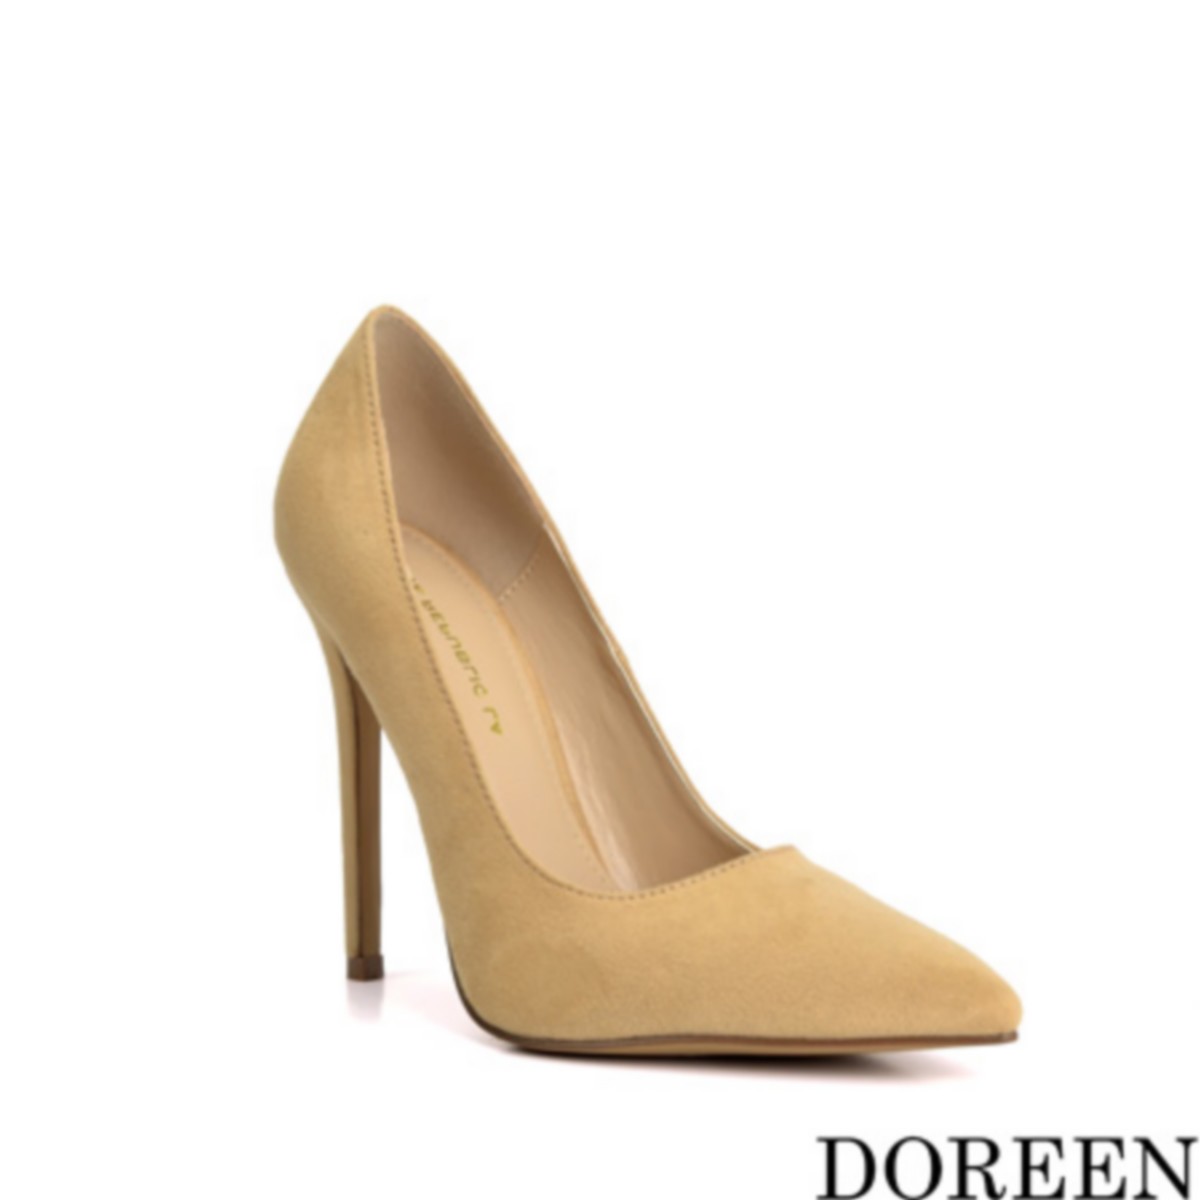 Style: DOREEN (Pumps) – Footwear Fashion Wholeseller